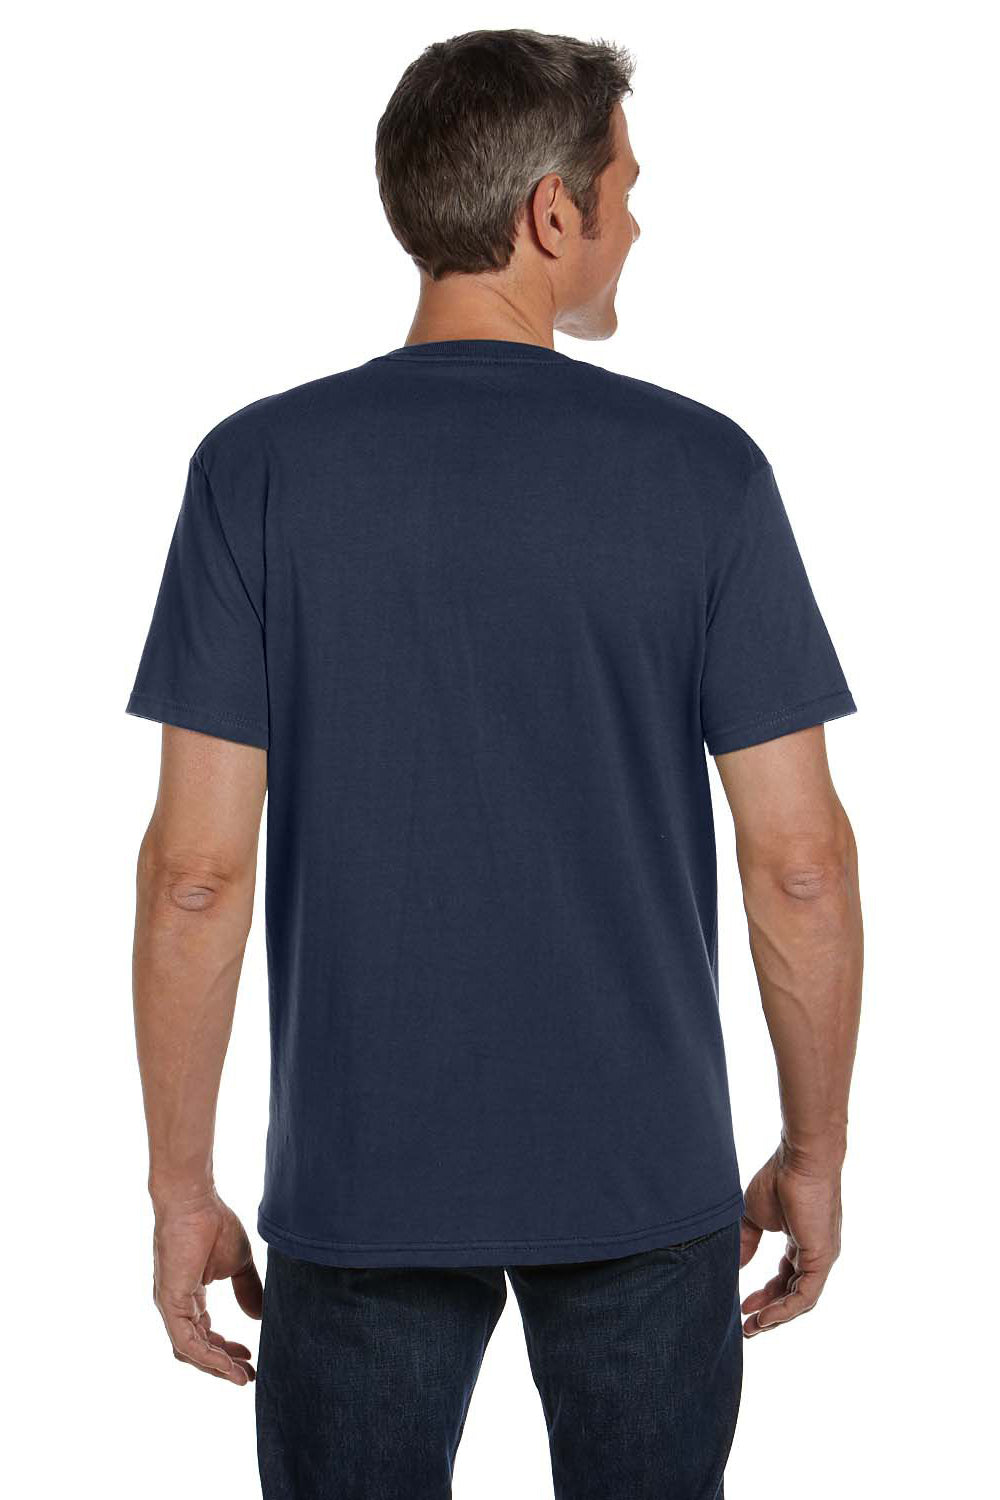 Econscious EC1000 Mens Short Sleeve Crewneck T-Shirt Pacific Blue Back